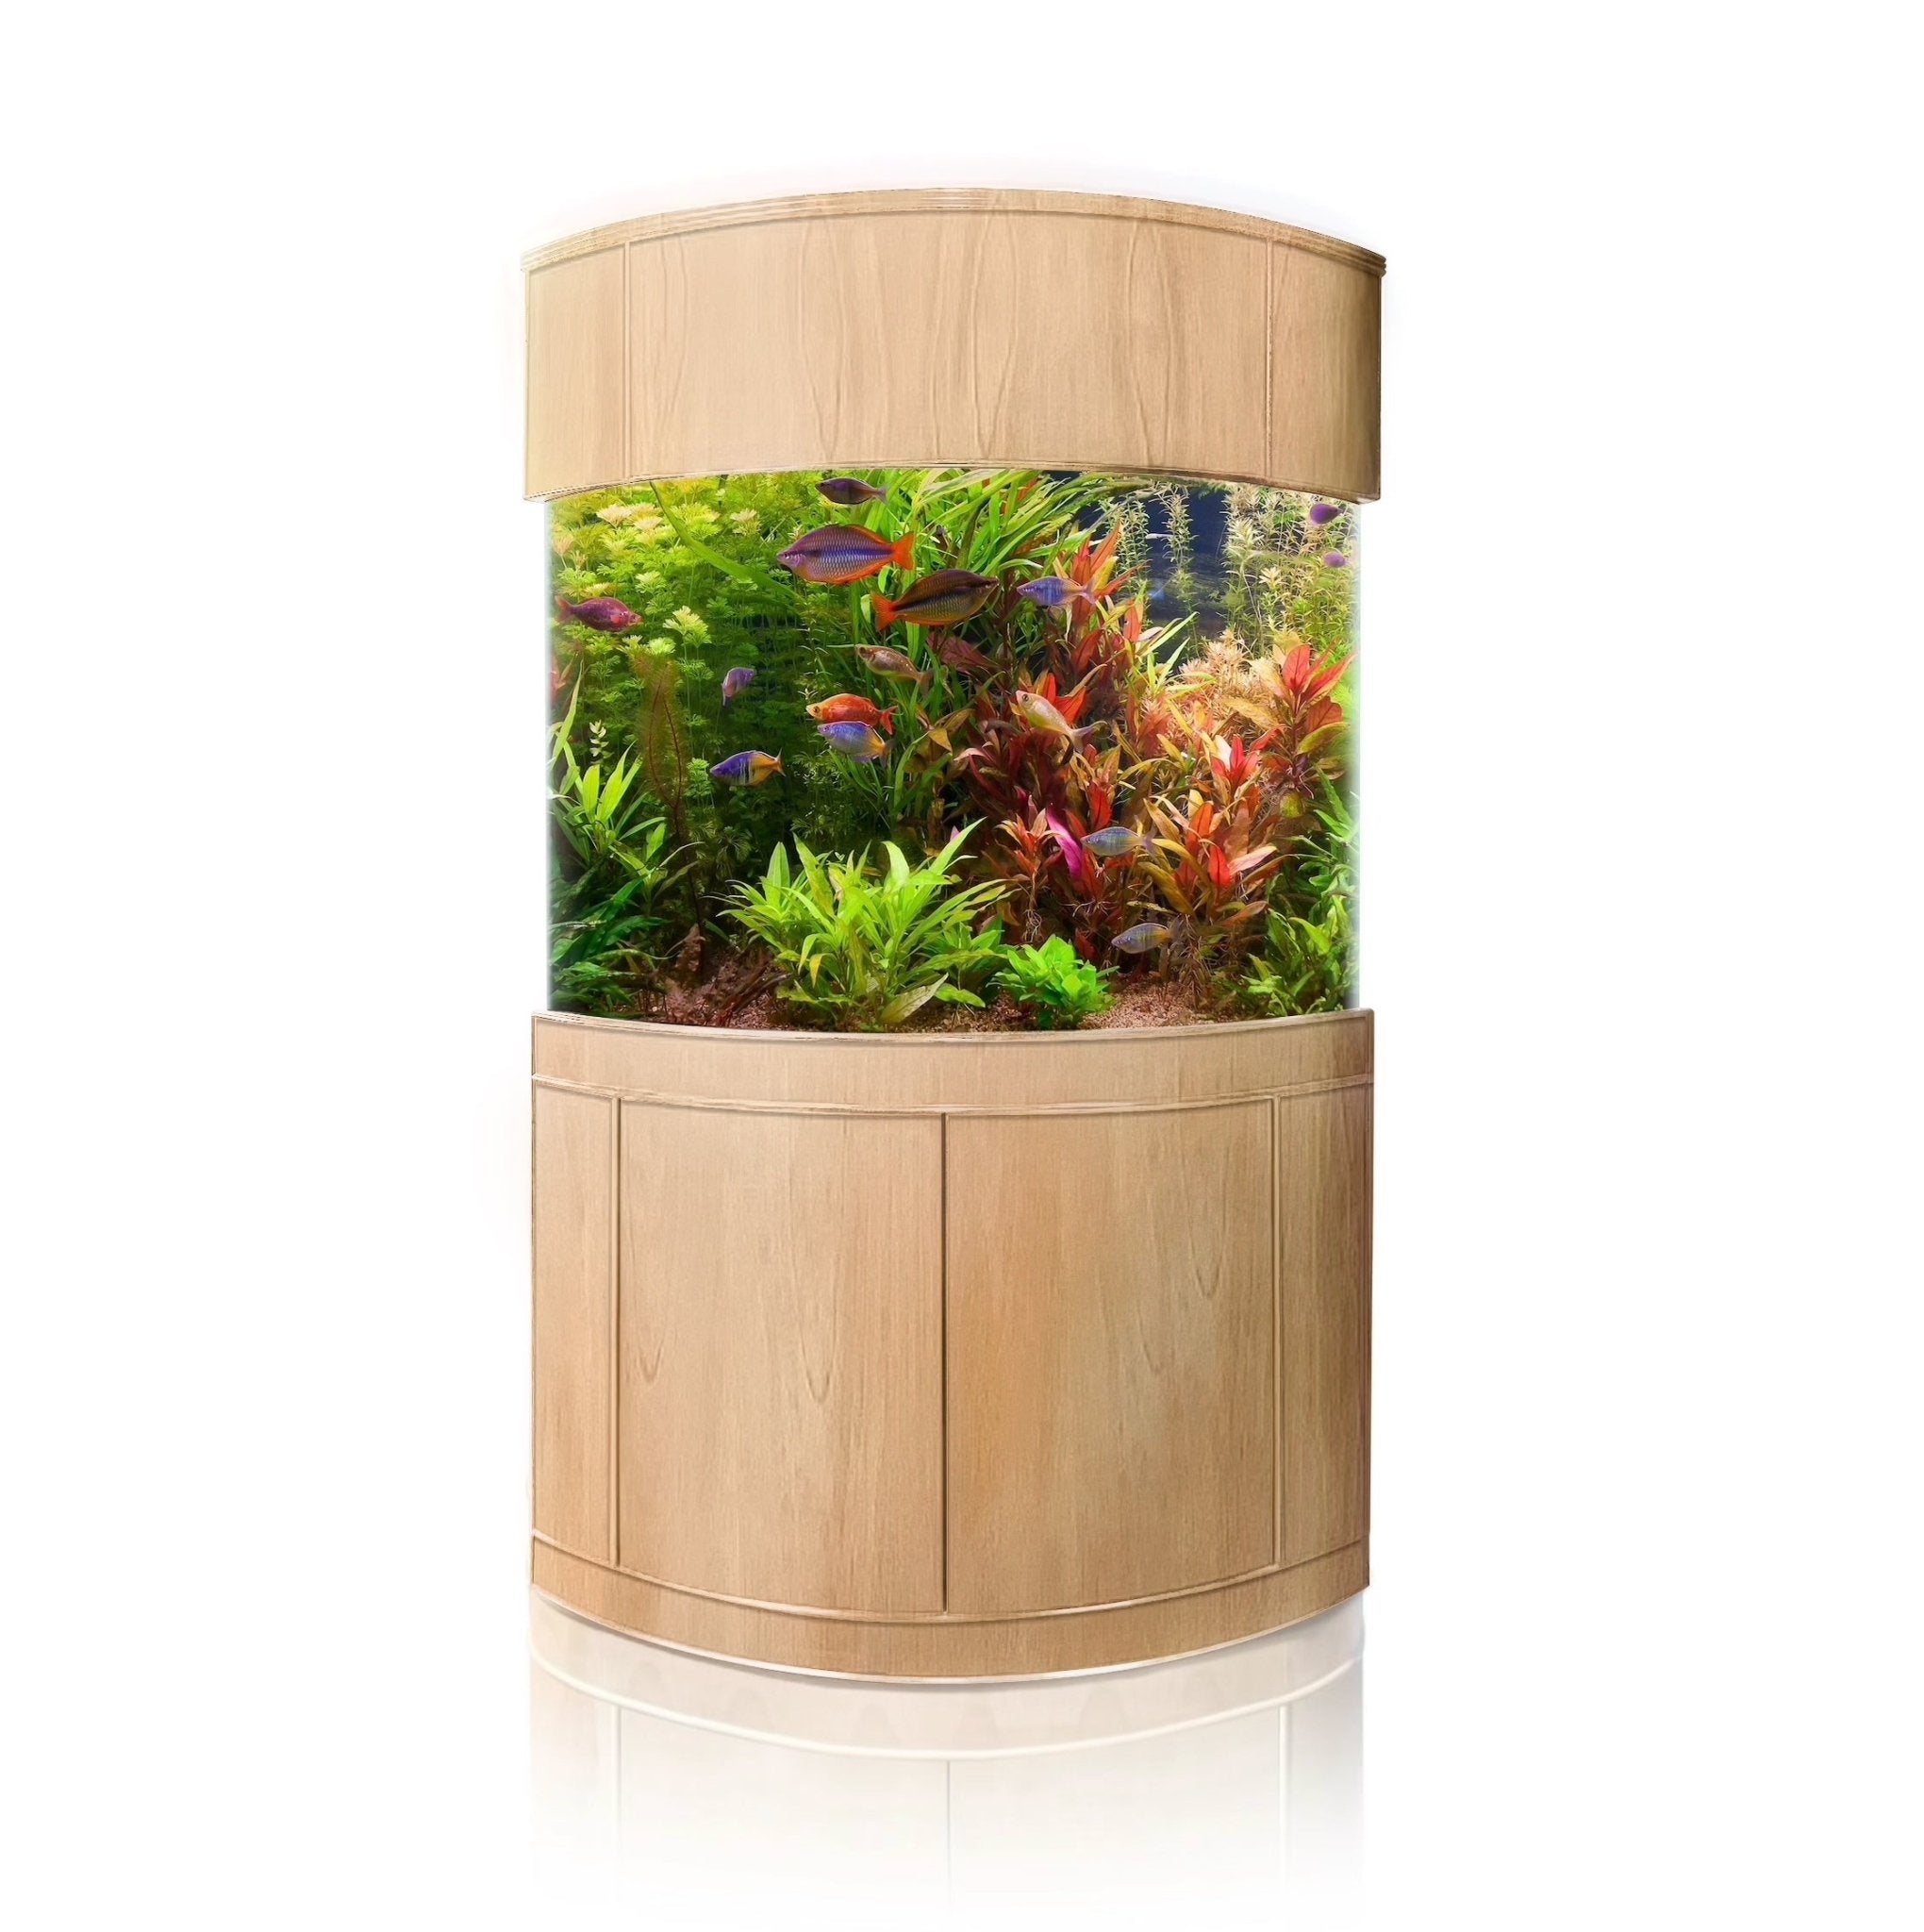 Luxury Corner Set 155 Gallon Fish Tank in Walnut Wood | AQUA VIM